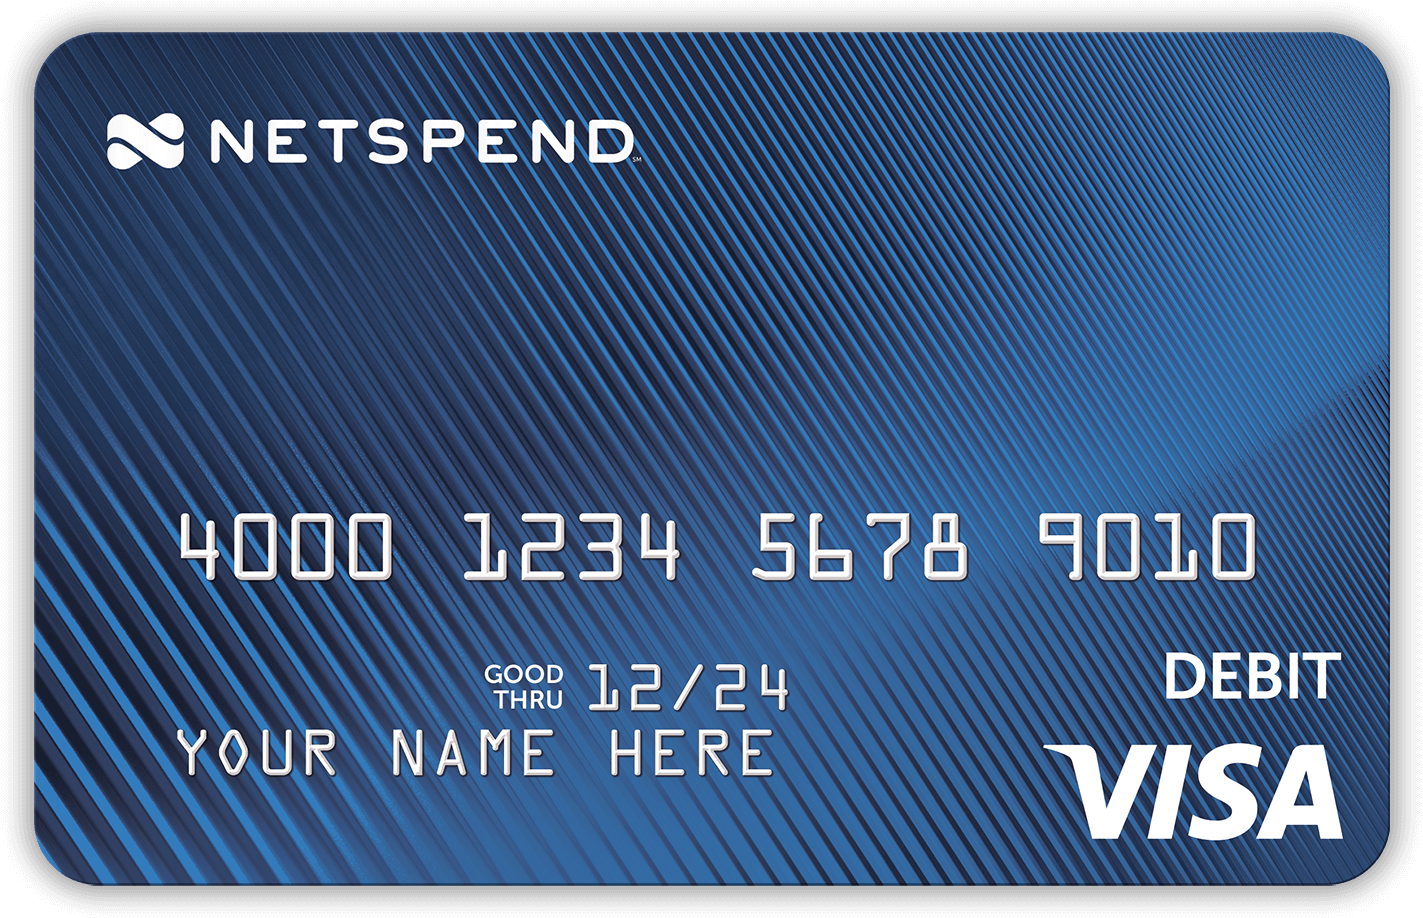 Netspend Visa Debit Card Mockup PNG